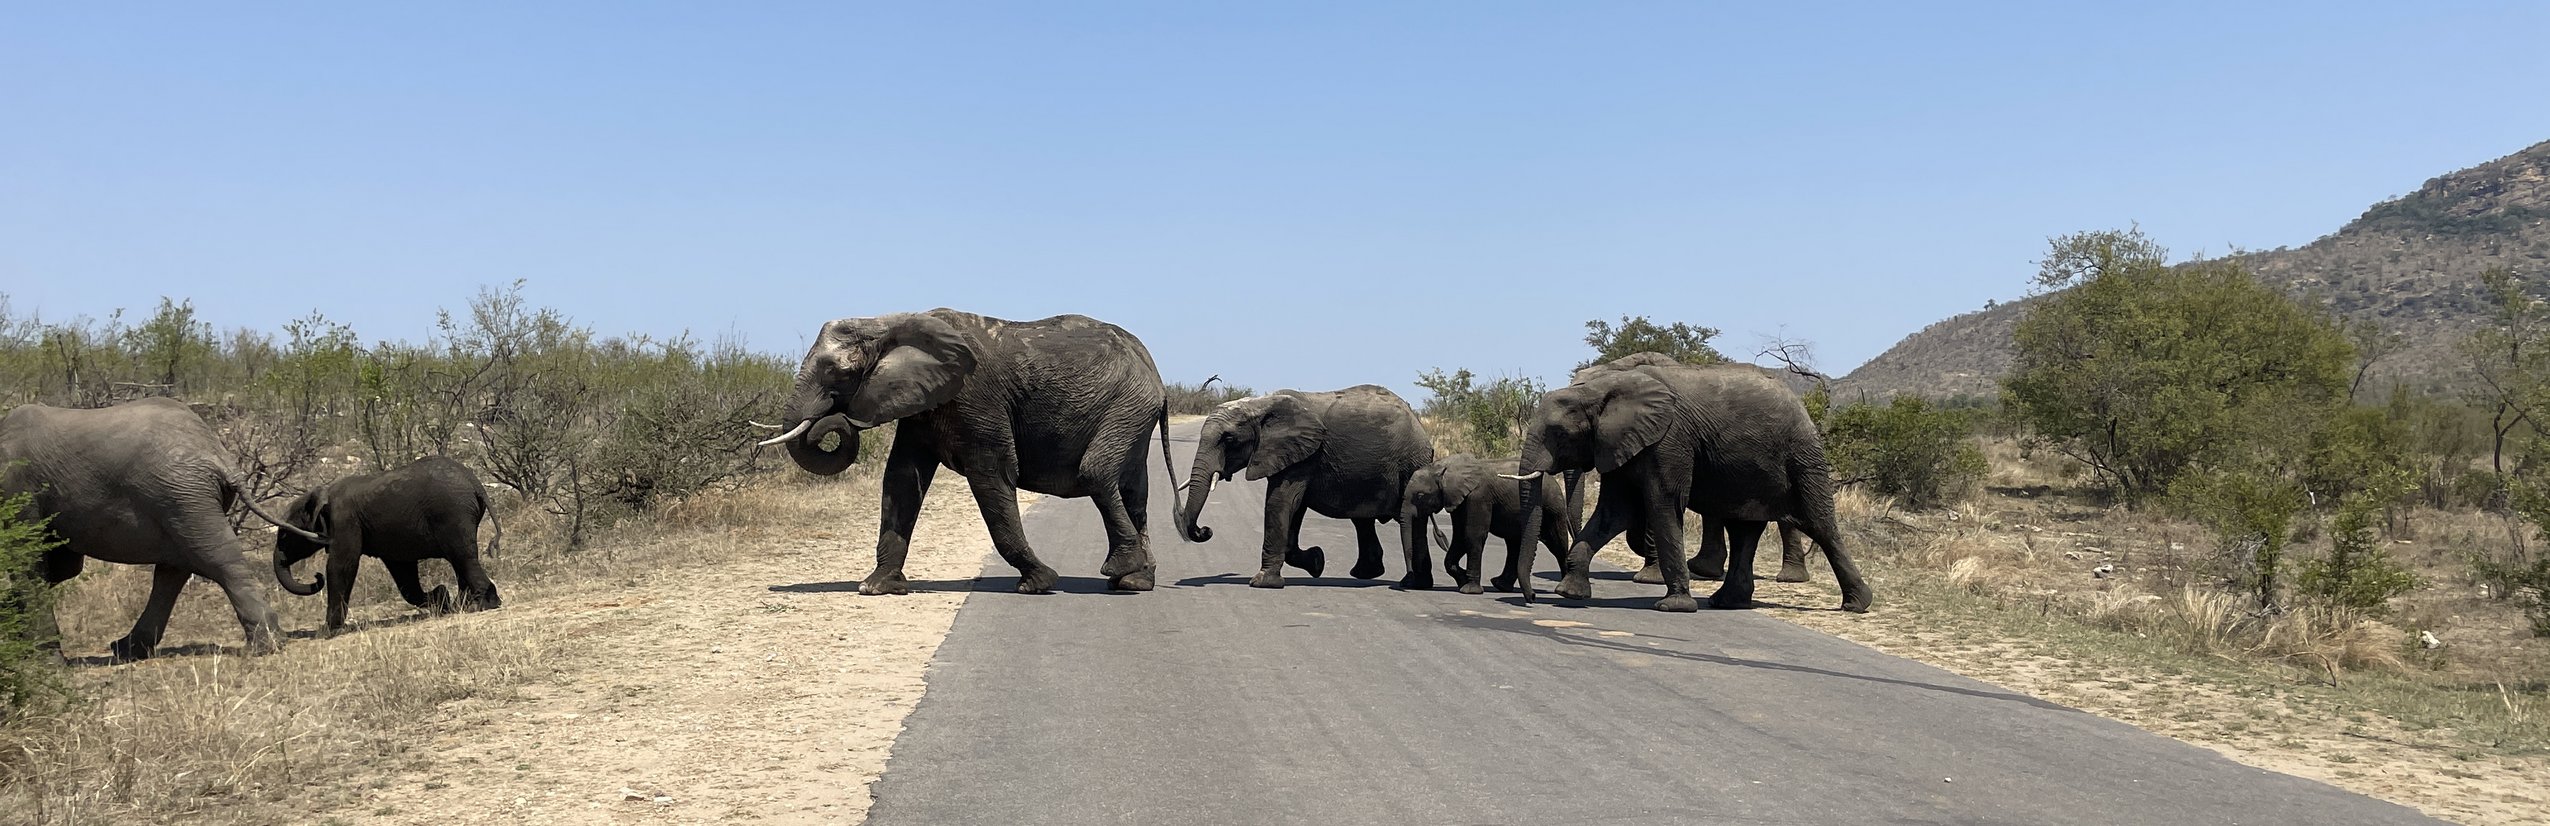 Rundreise Krüger Nationalpark mit Kindern - Safari Elefantenherde